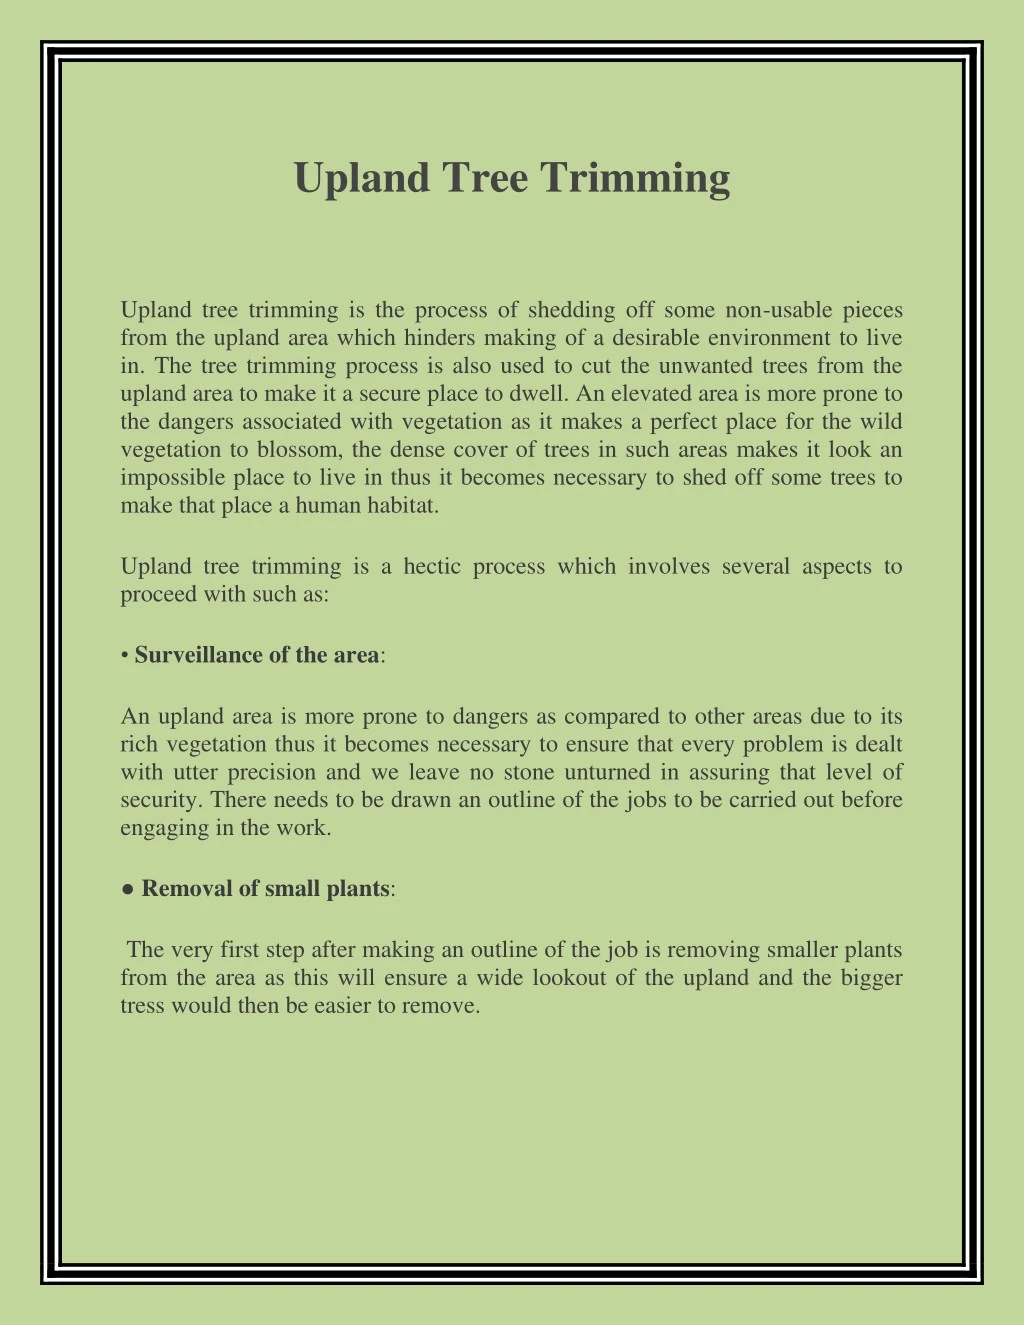 upland tree trimming